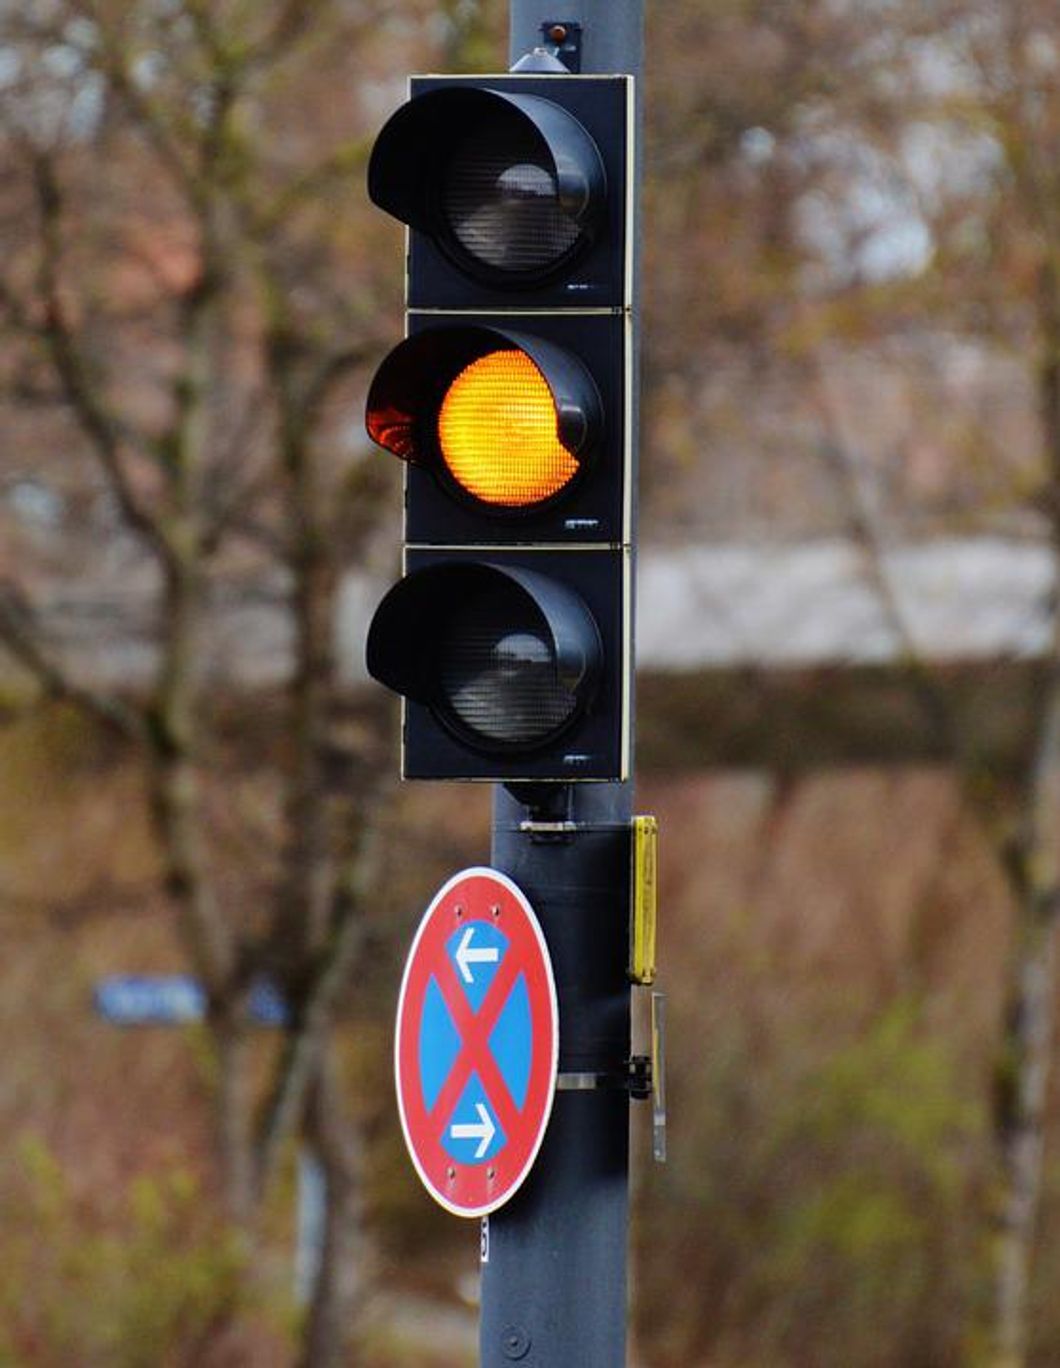 https://www.maxpixel.net/Road-Traffic-Lights-Yellow-Light-Signal-1286799